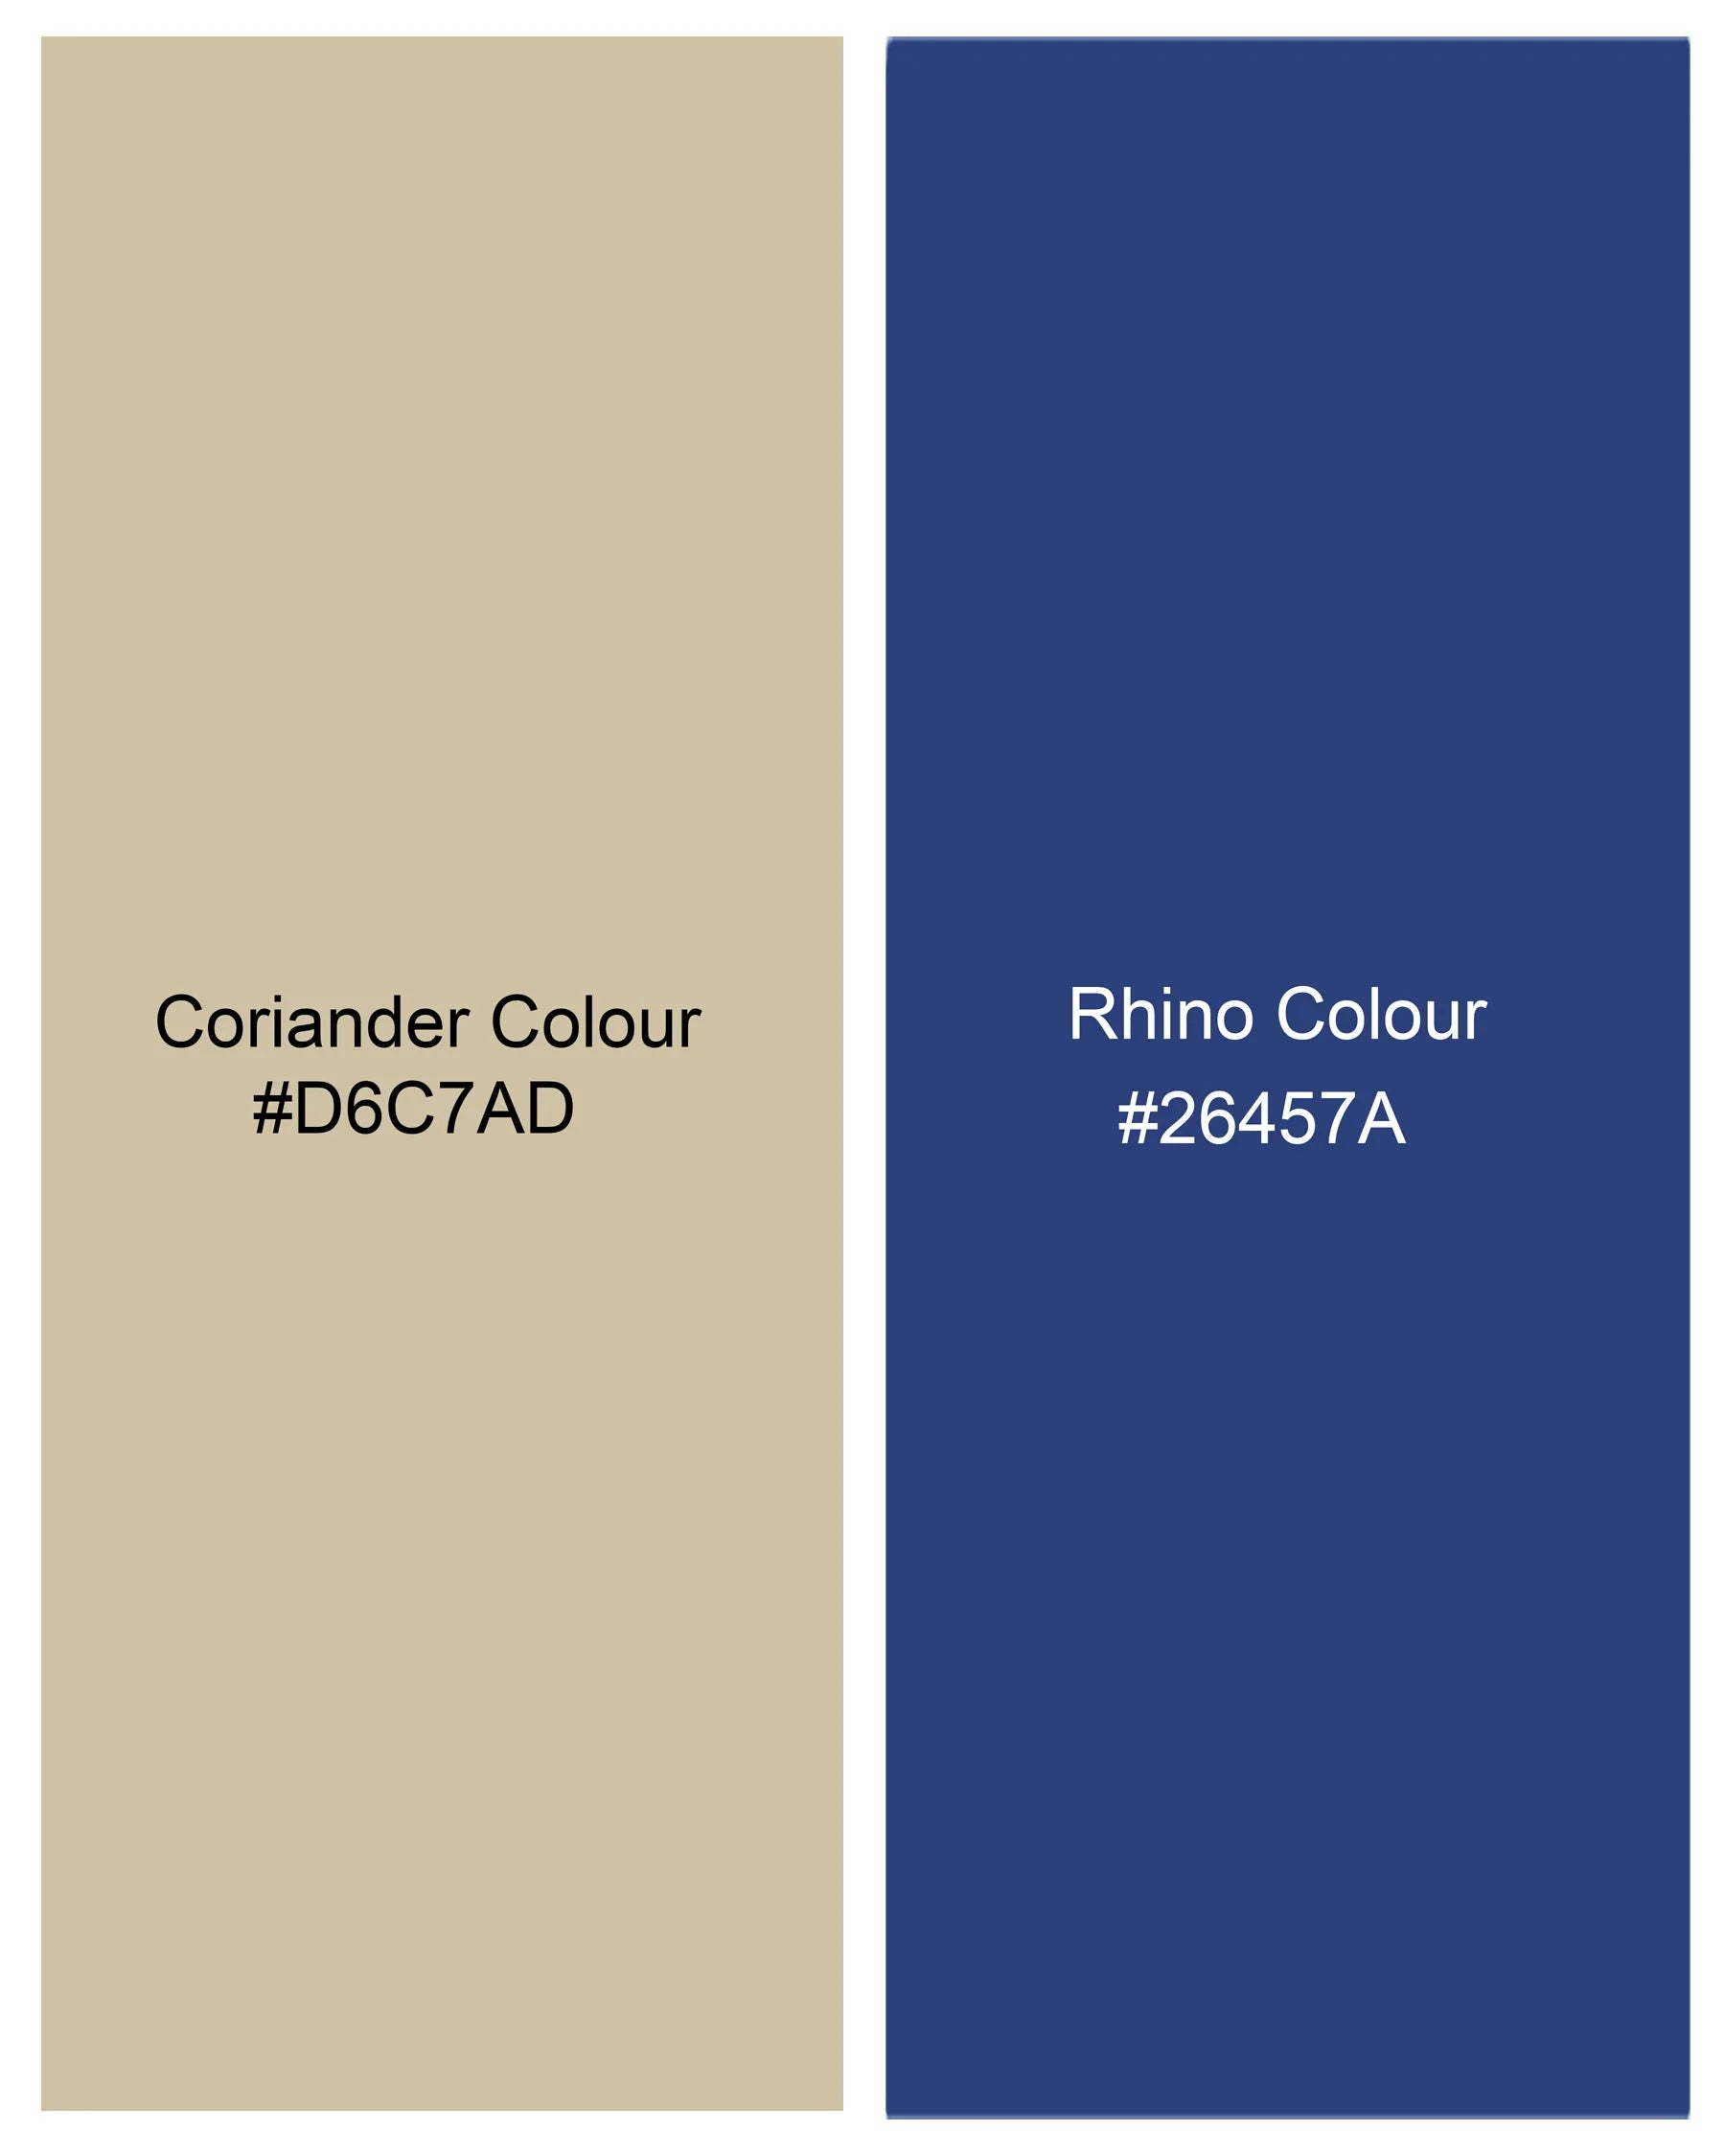 Coriander Light Brown with Rhino Blue Plaid Pant  T2155-28, T2155-30, T2155-32, T2155-34, T2155-36, T2155-38, T2155-40, T2155-42, T2155-44
